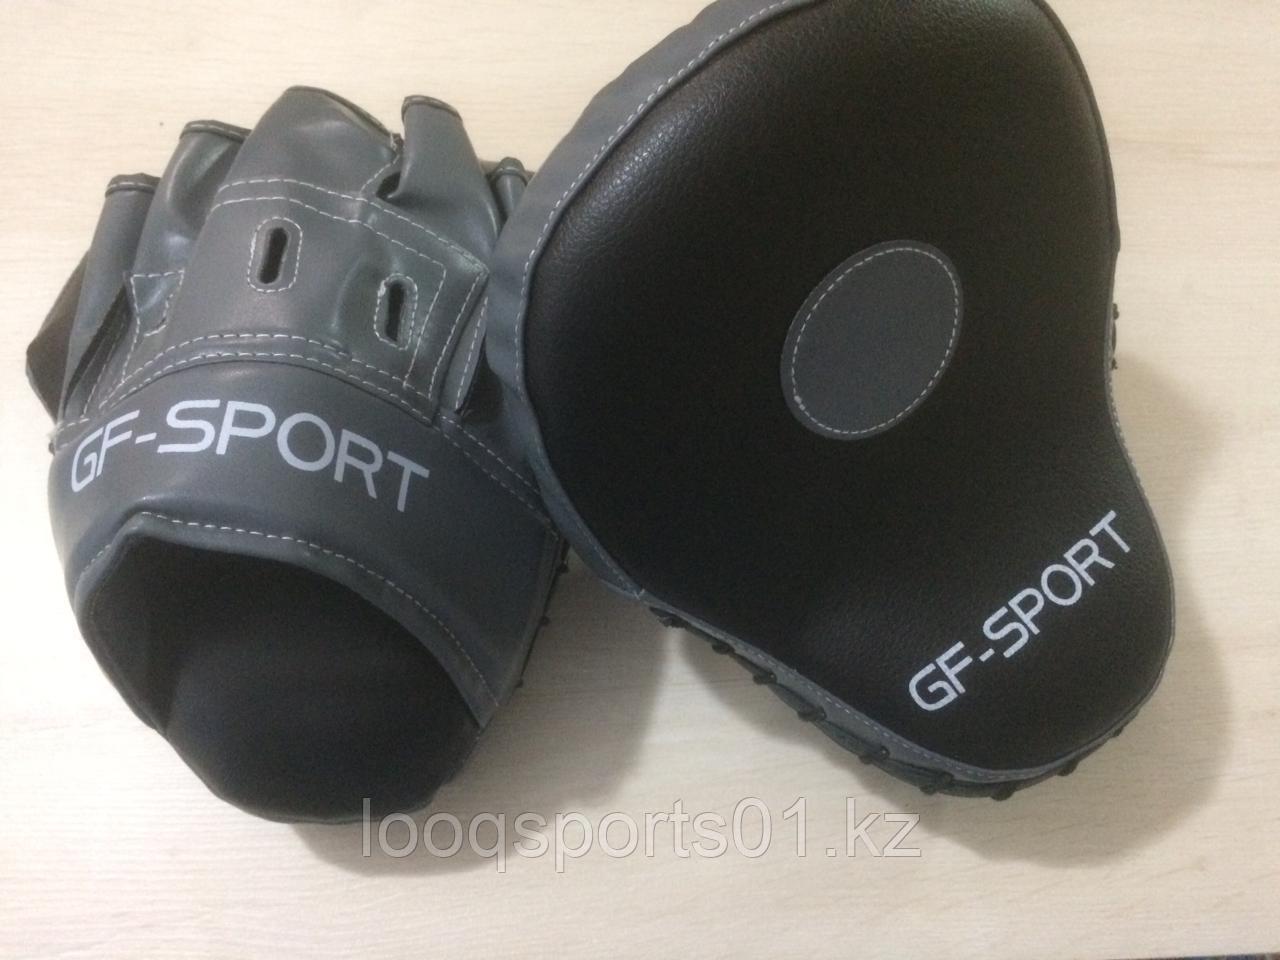 Боксерские лапы GF-Sport